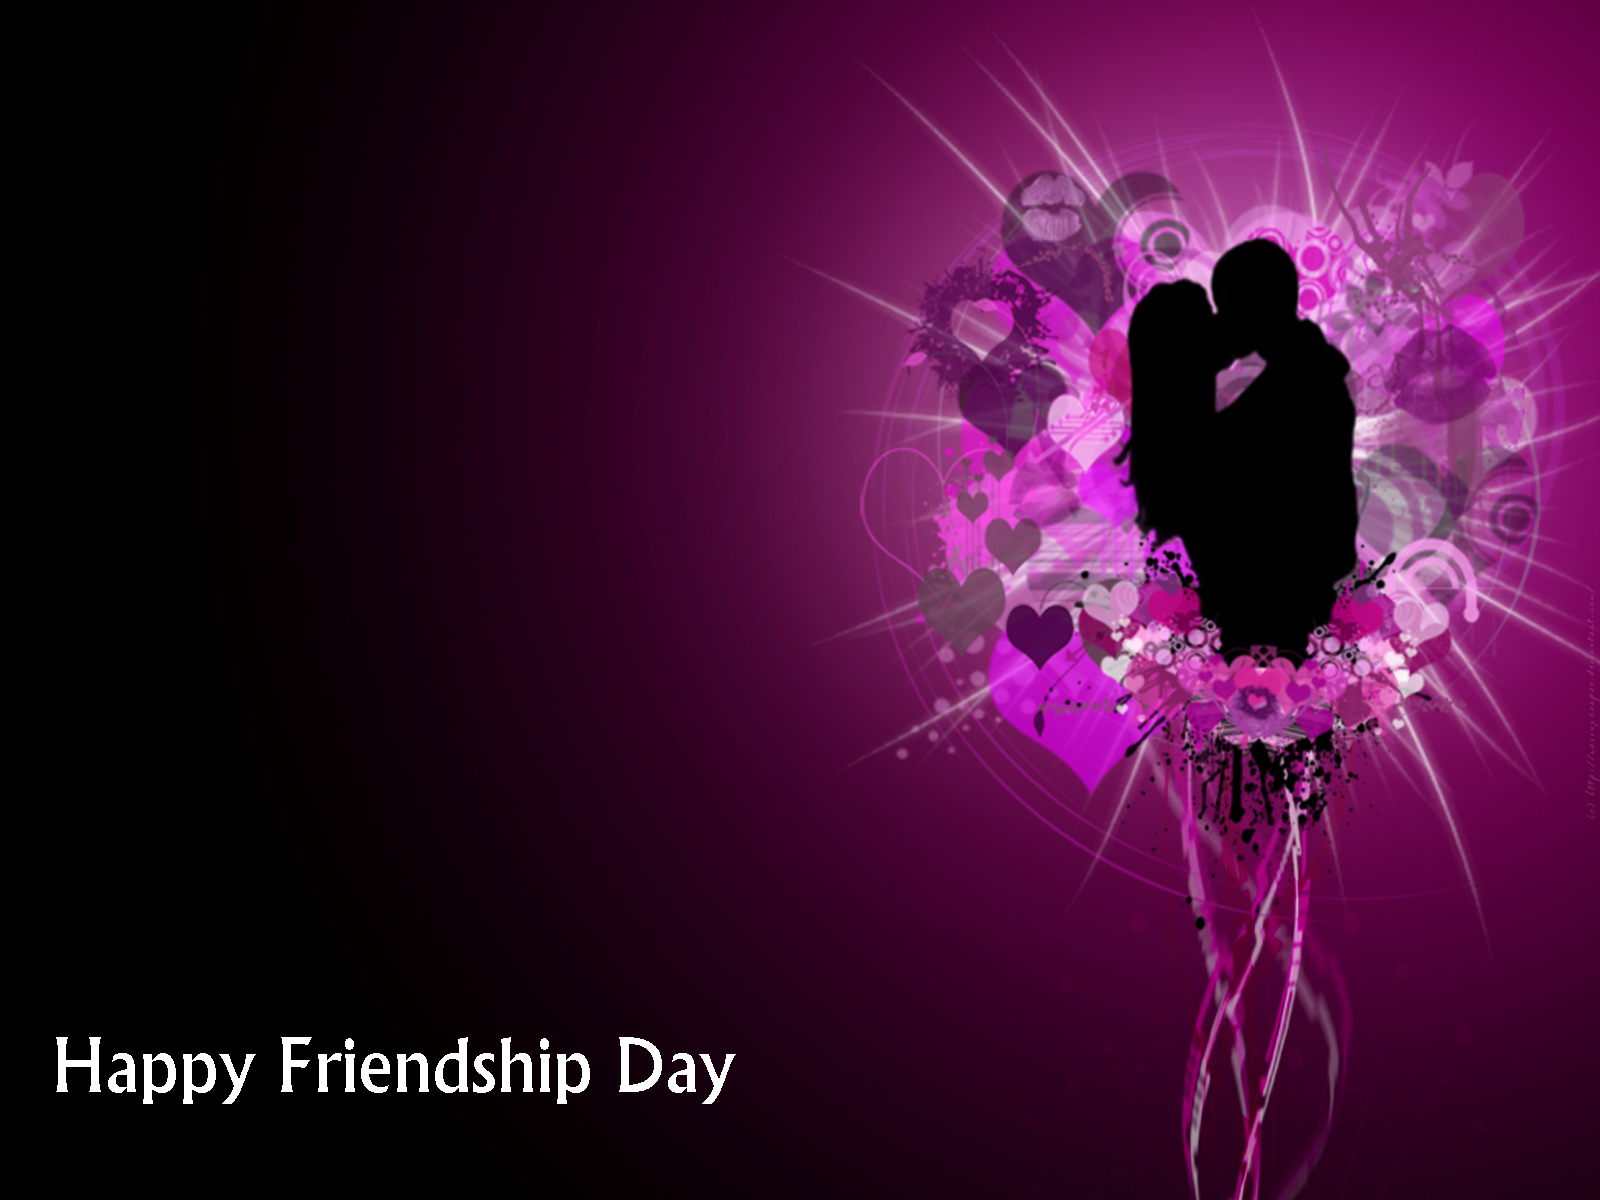 download wallpaper of love and friendship,violet,purple,graphic design,love,valentine's day